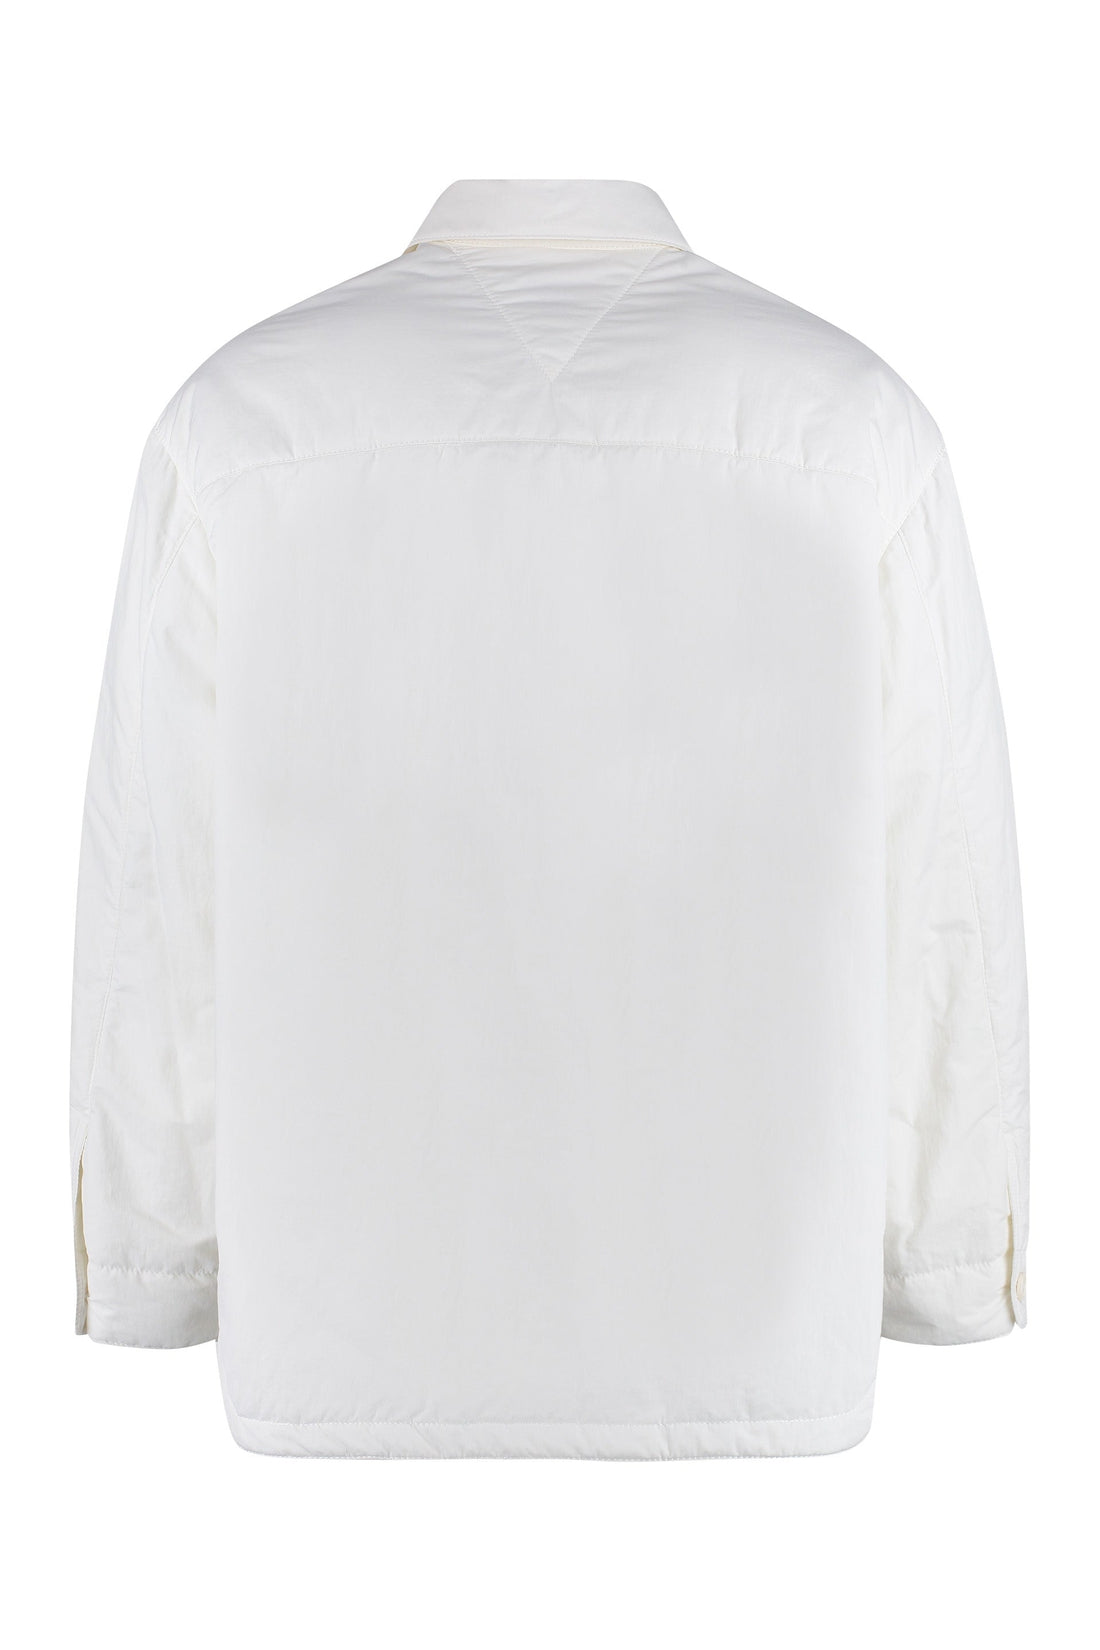 Bottega Veneta-OUTLET-SALE-Nylon jacket-ARCHIVIST